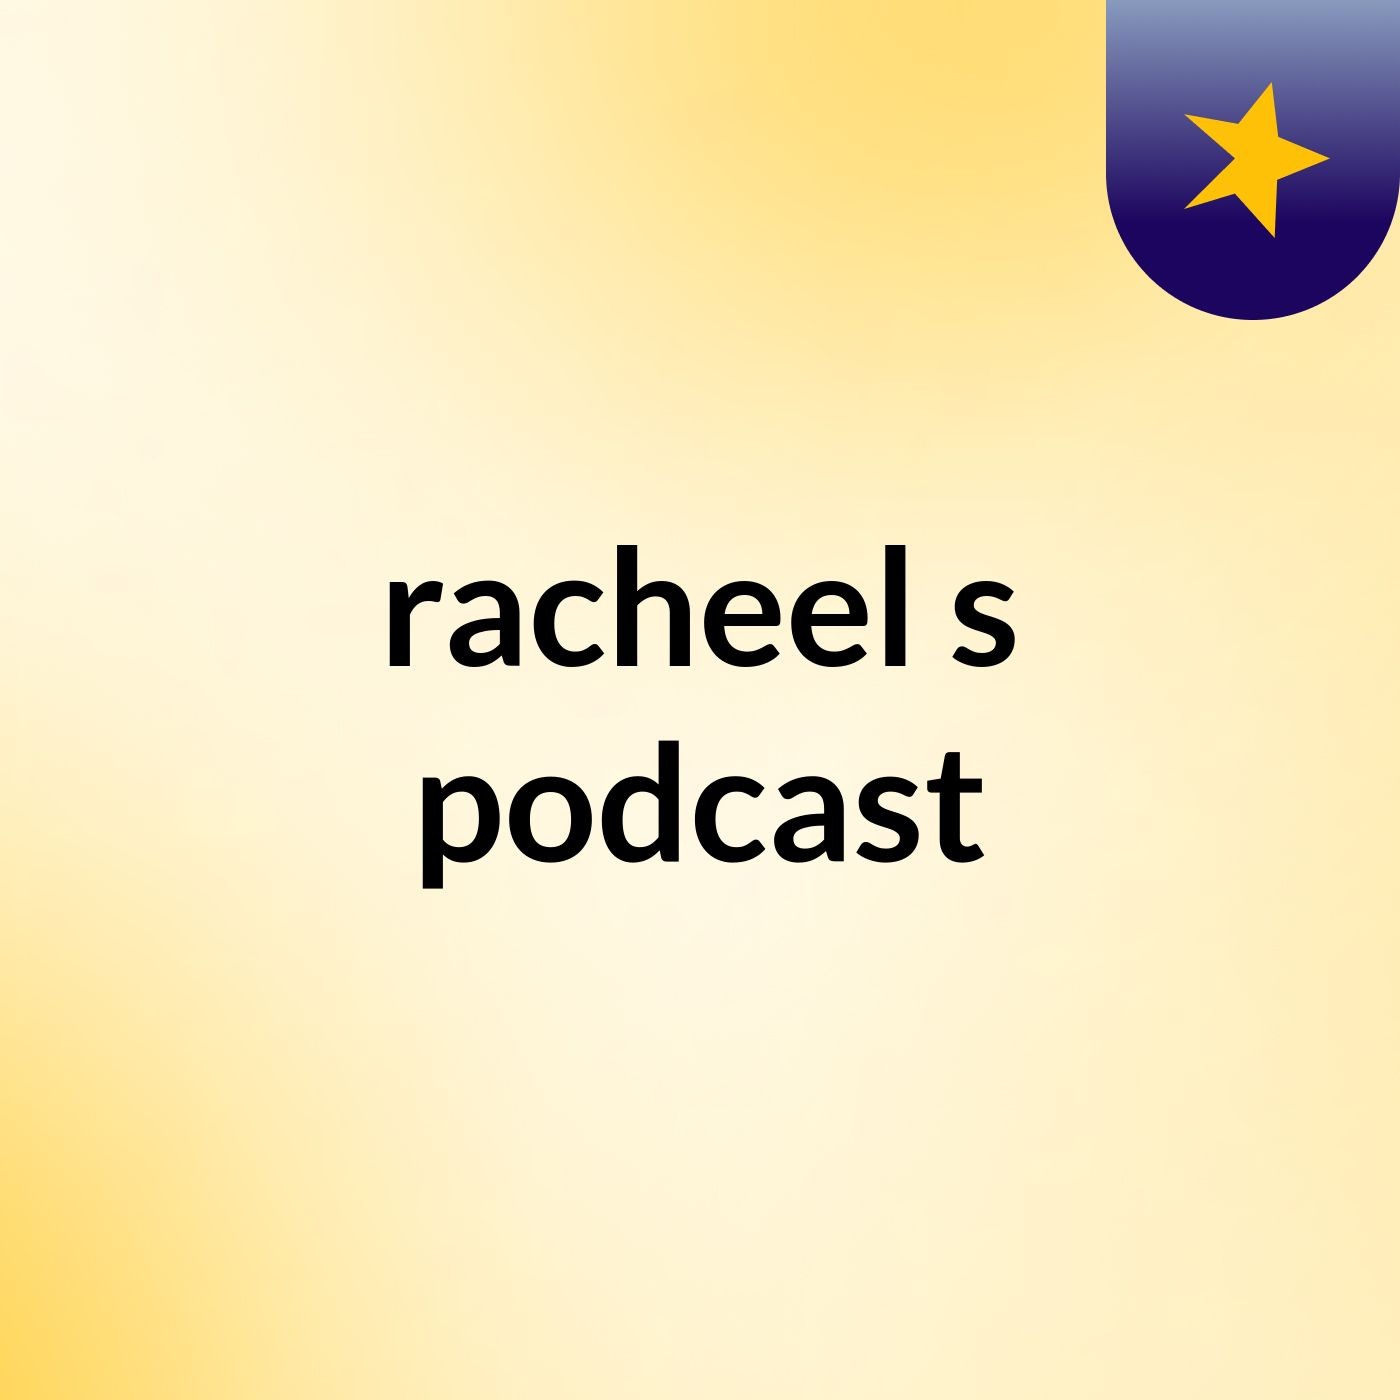 racheel's podcast